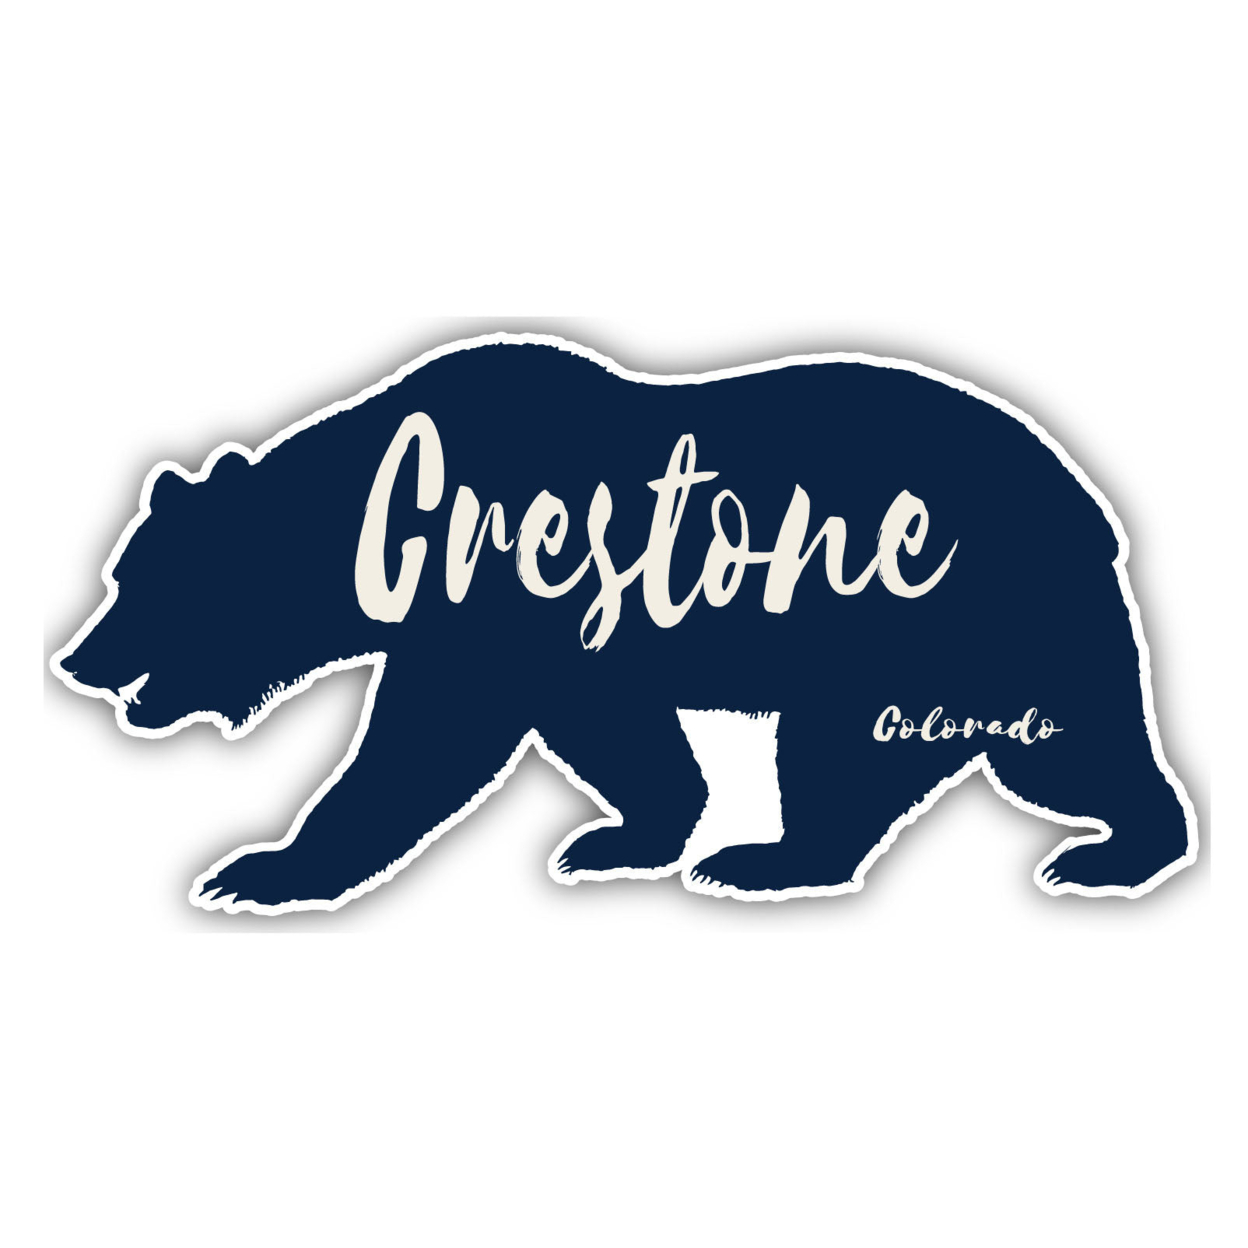 Crestone Colorado Souvenir Decorative Stickers (Choose Theme And Size) - Single Unit, 4-Inch, Bear